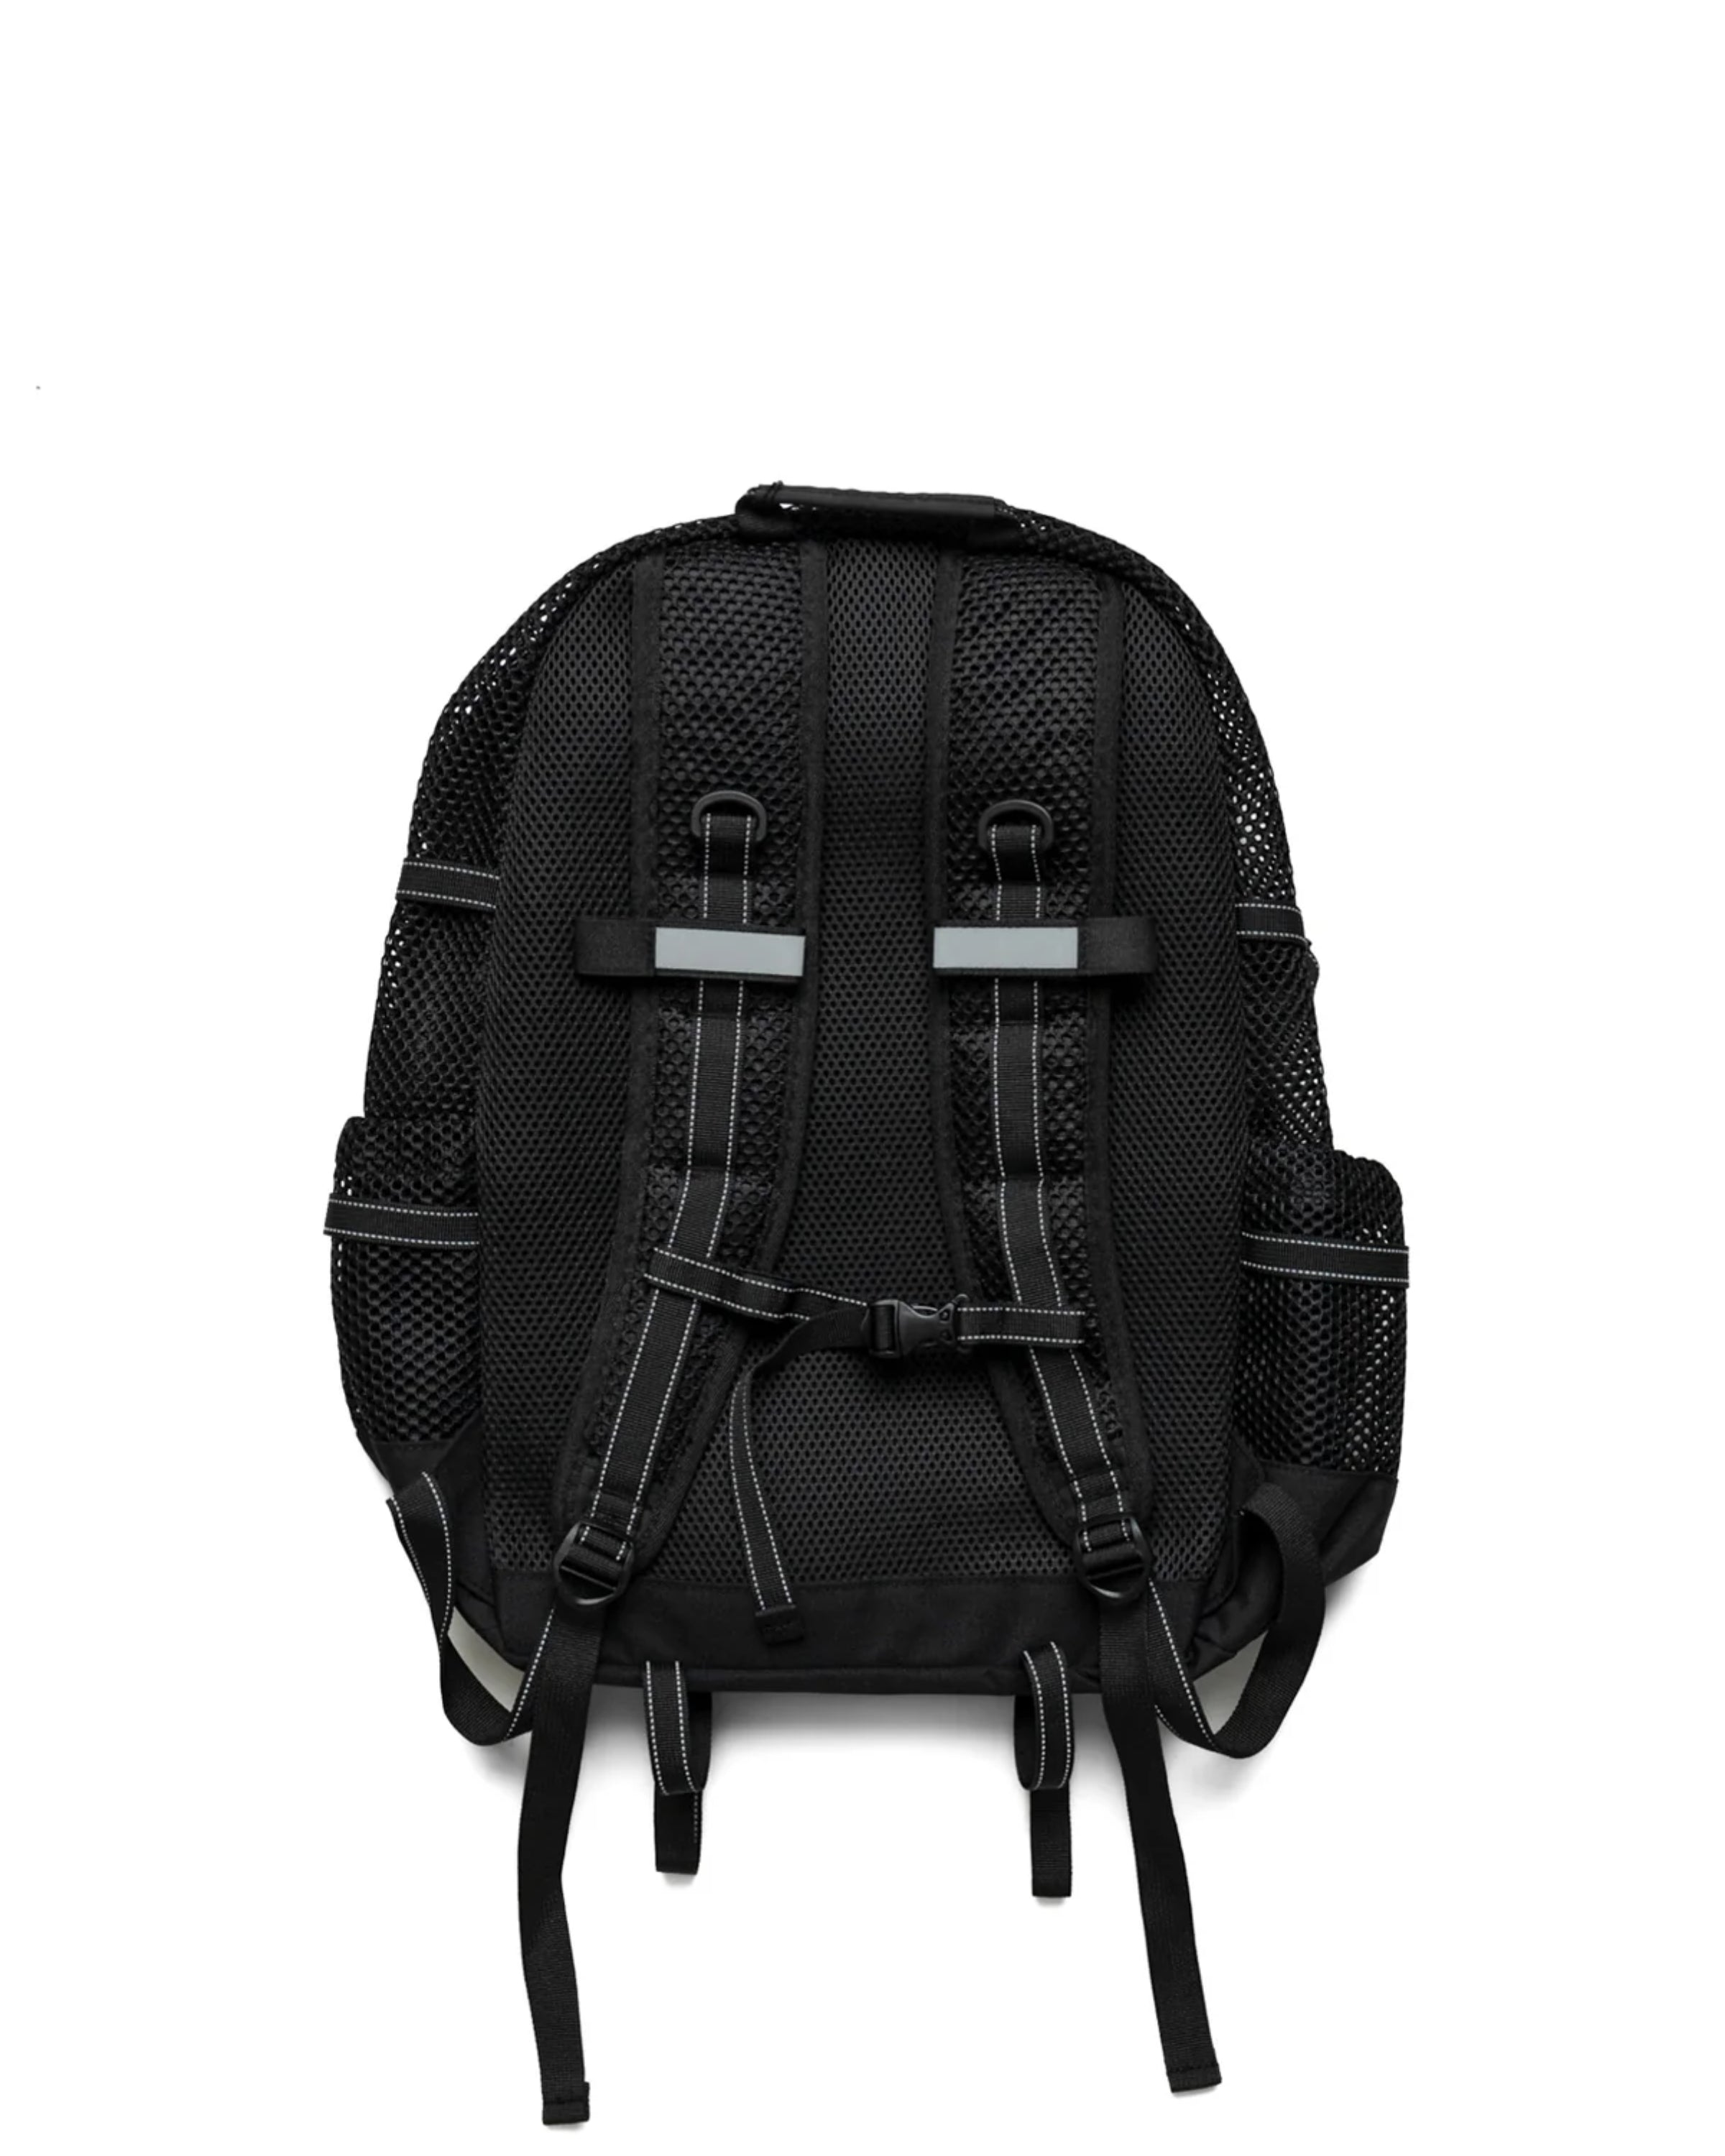 3D Mesh Backpack in Black